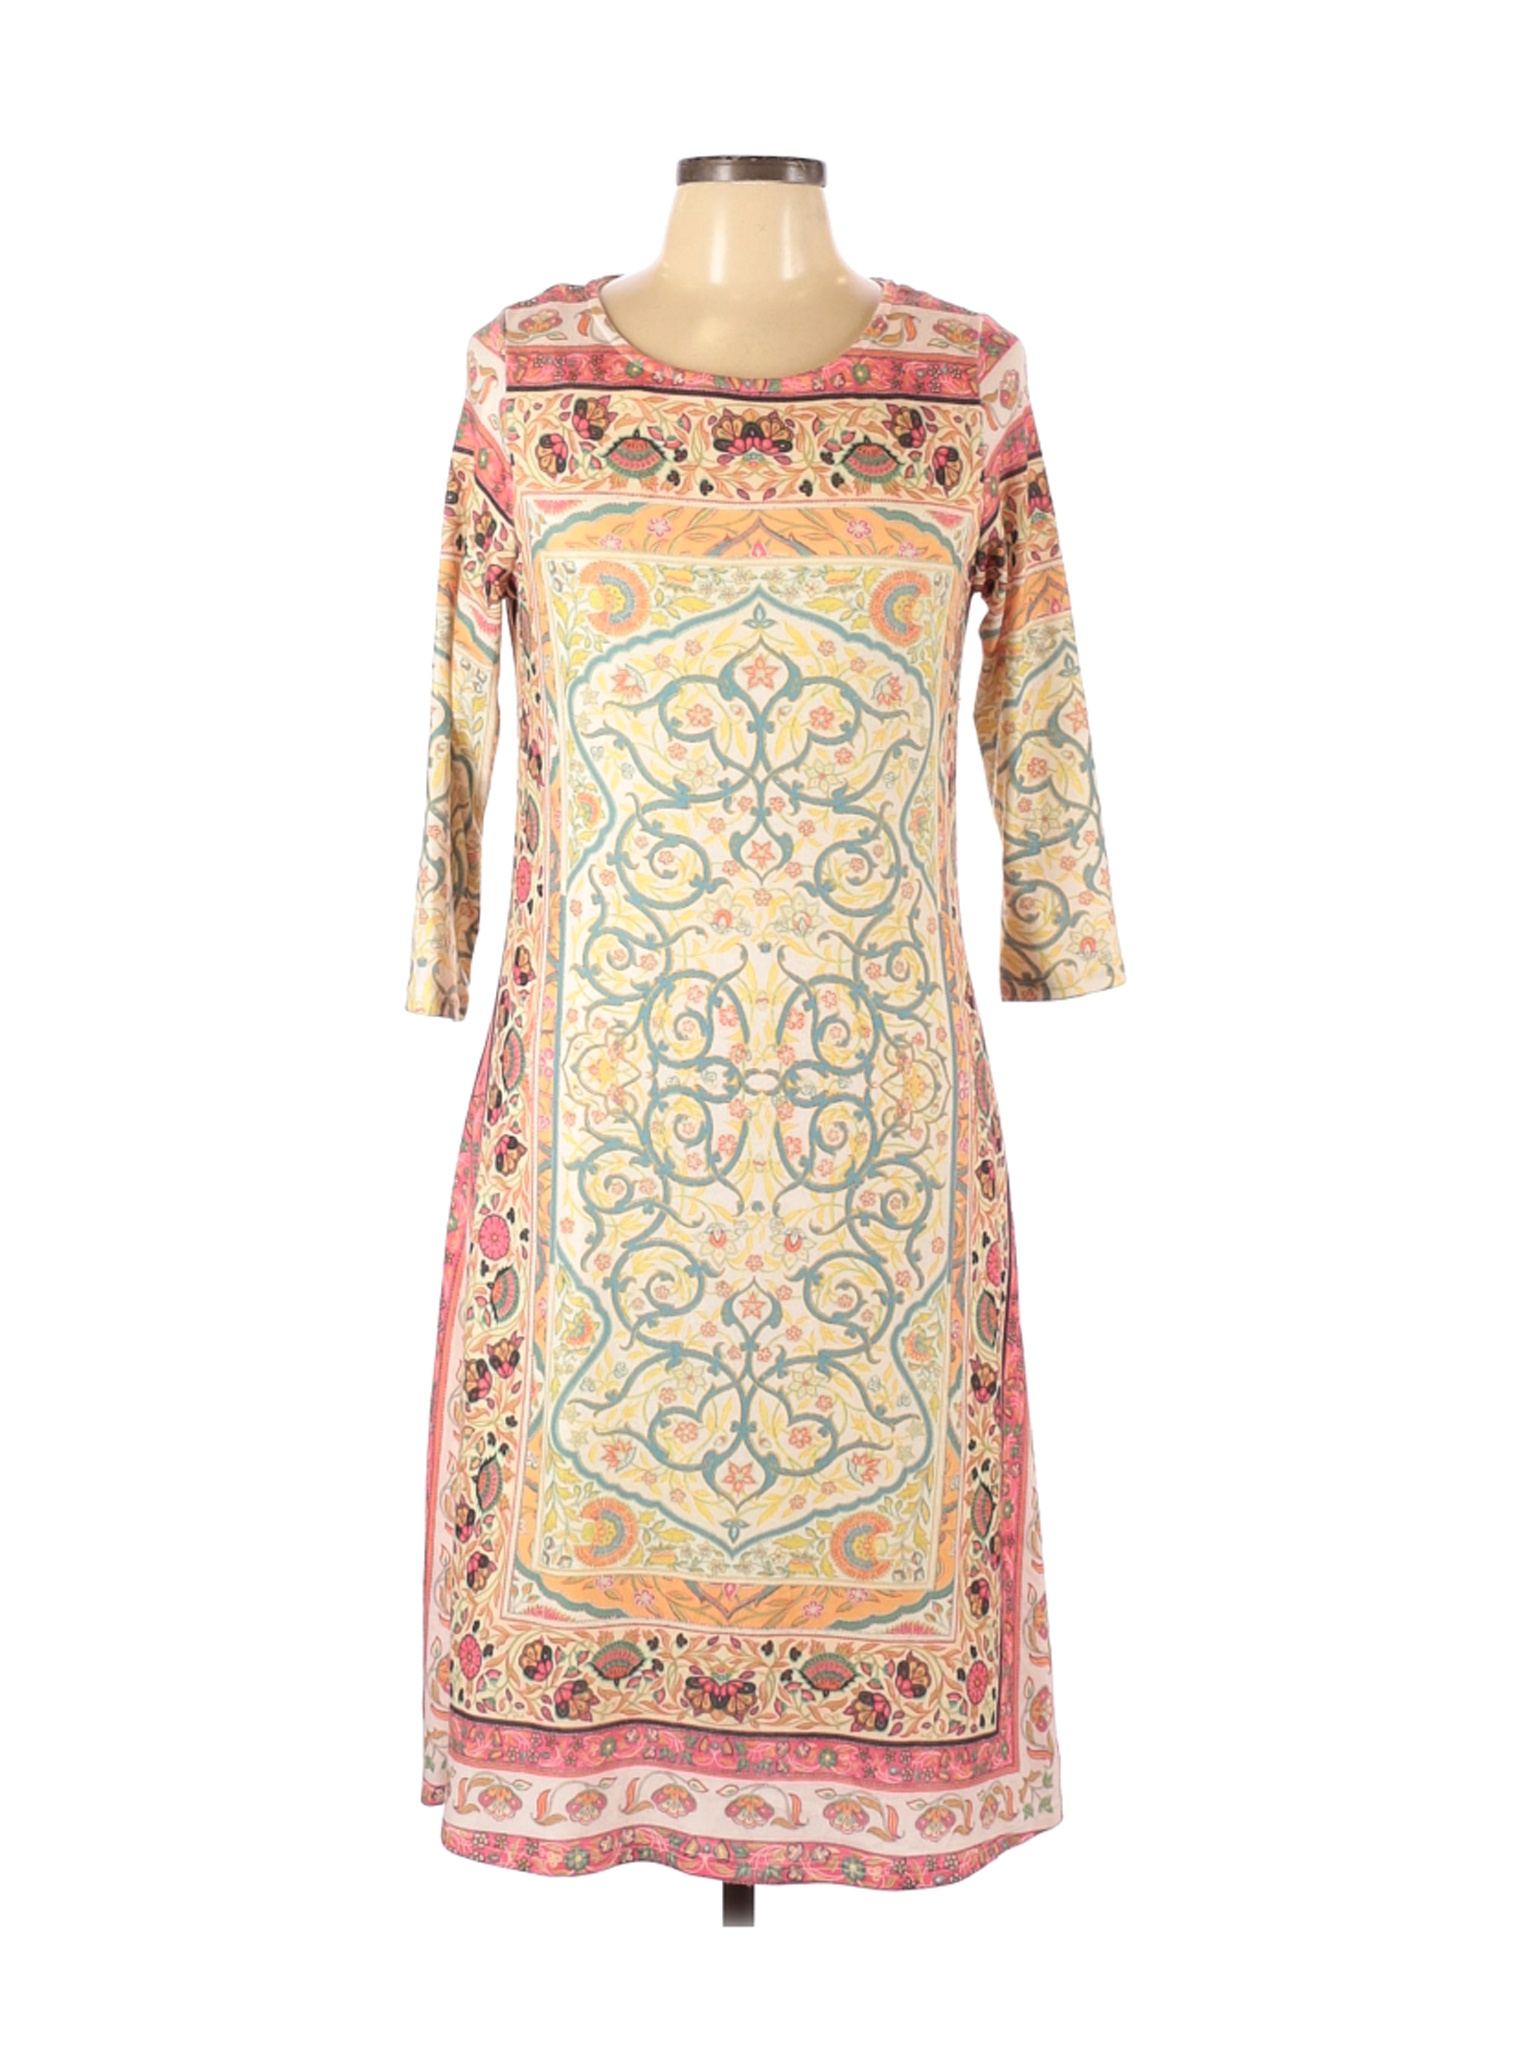 Nurture Women Ivory Casual Dress L | eBay